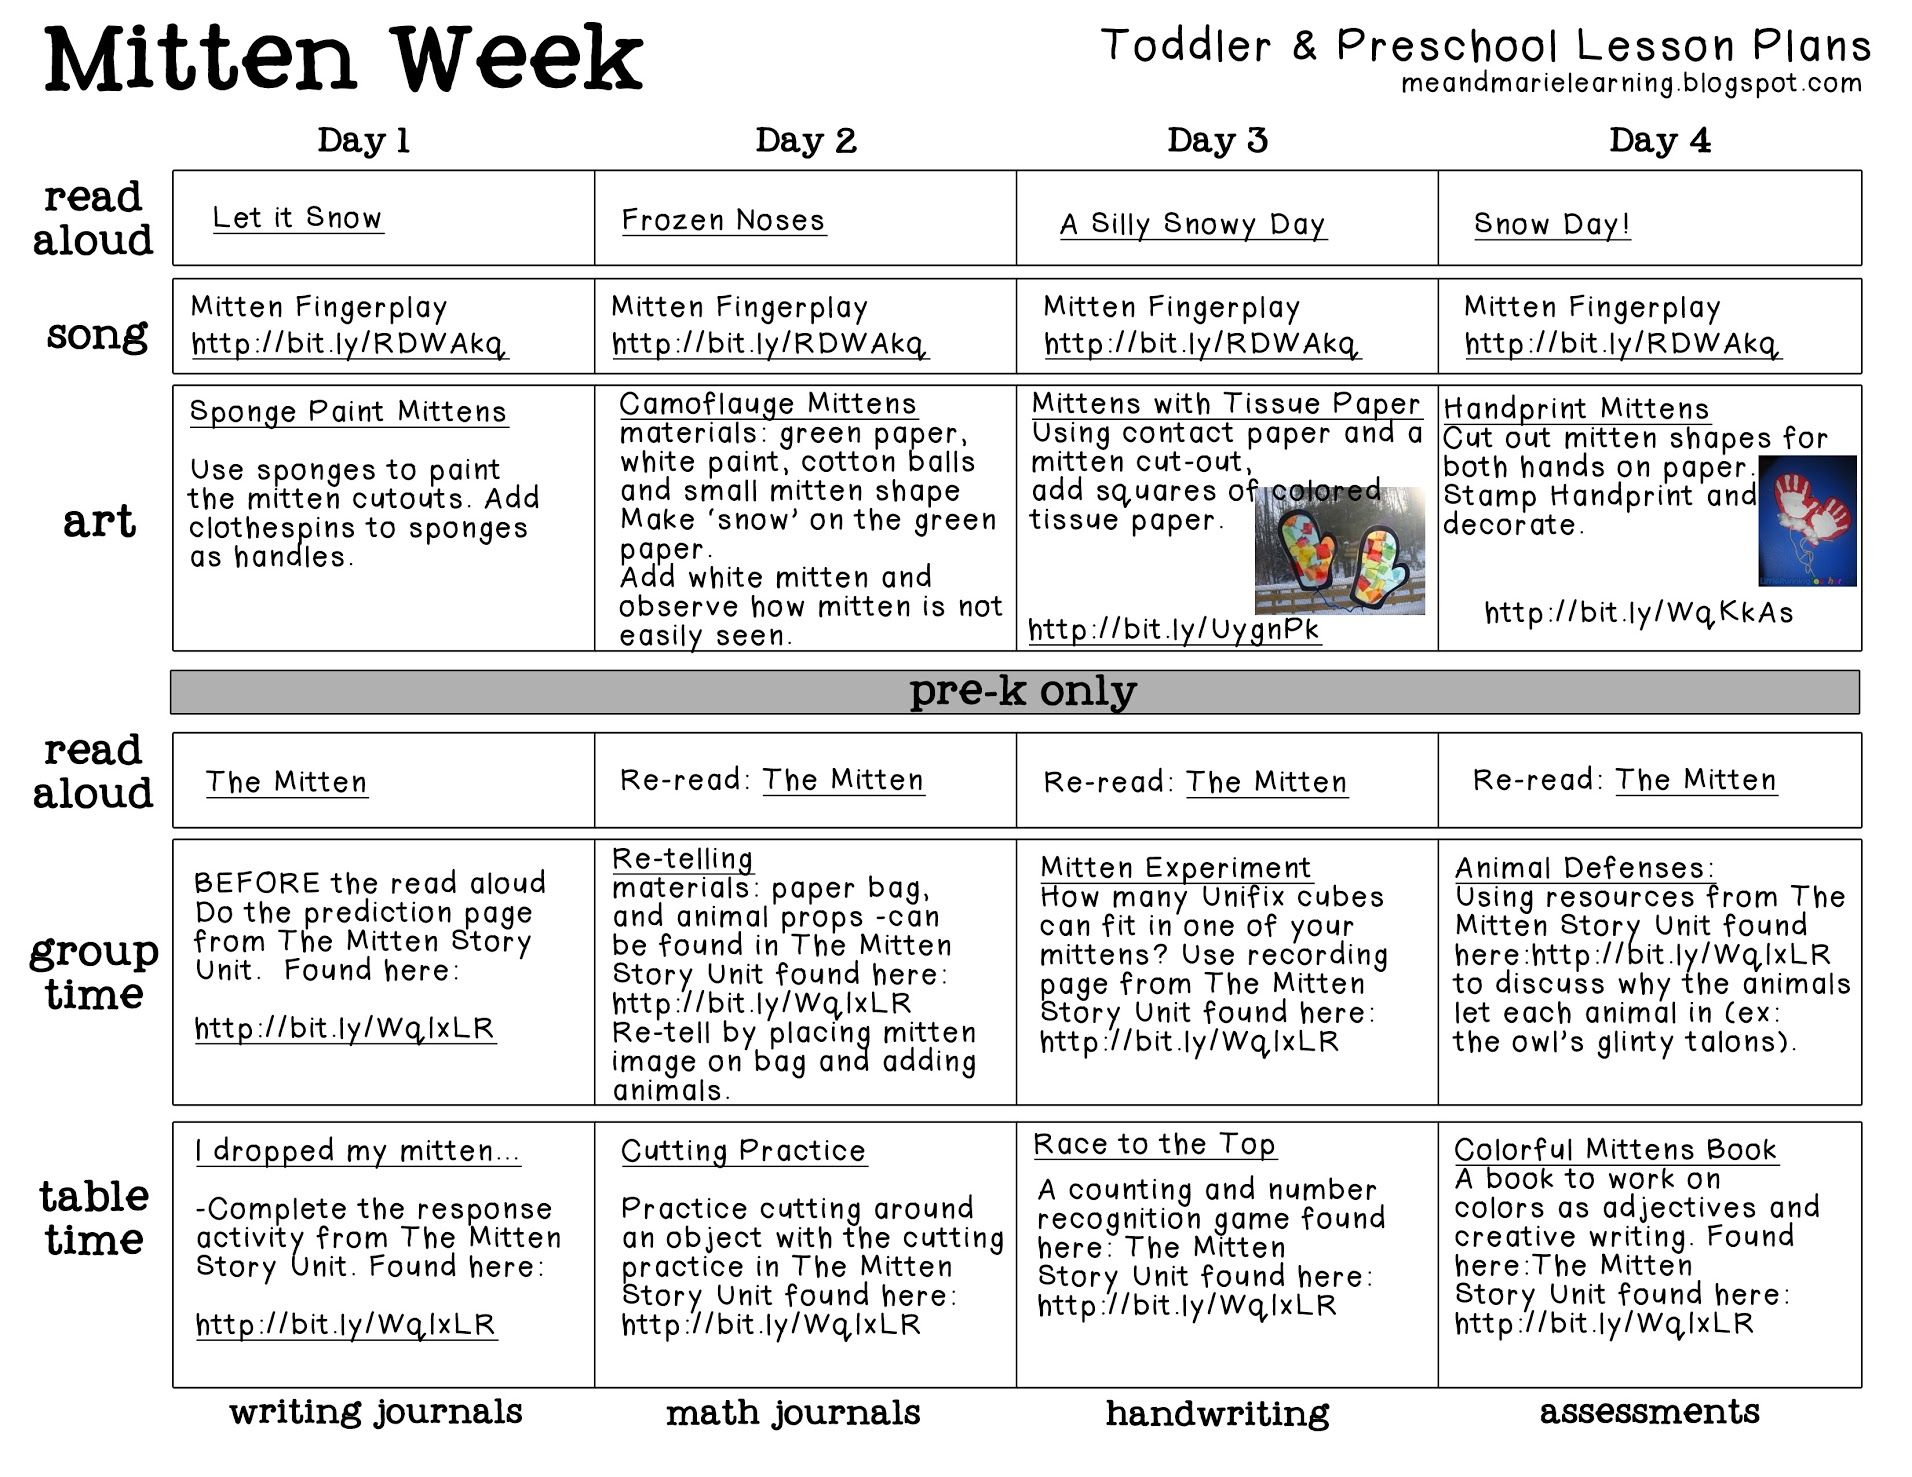 Displaying Mitten Week Copy | Preschool Lesson Plans